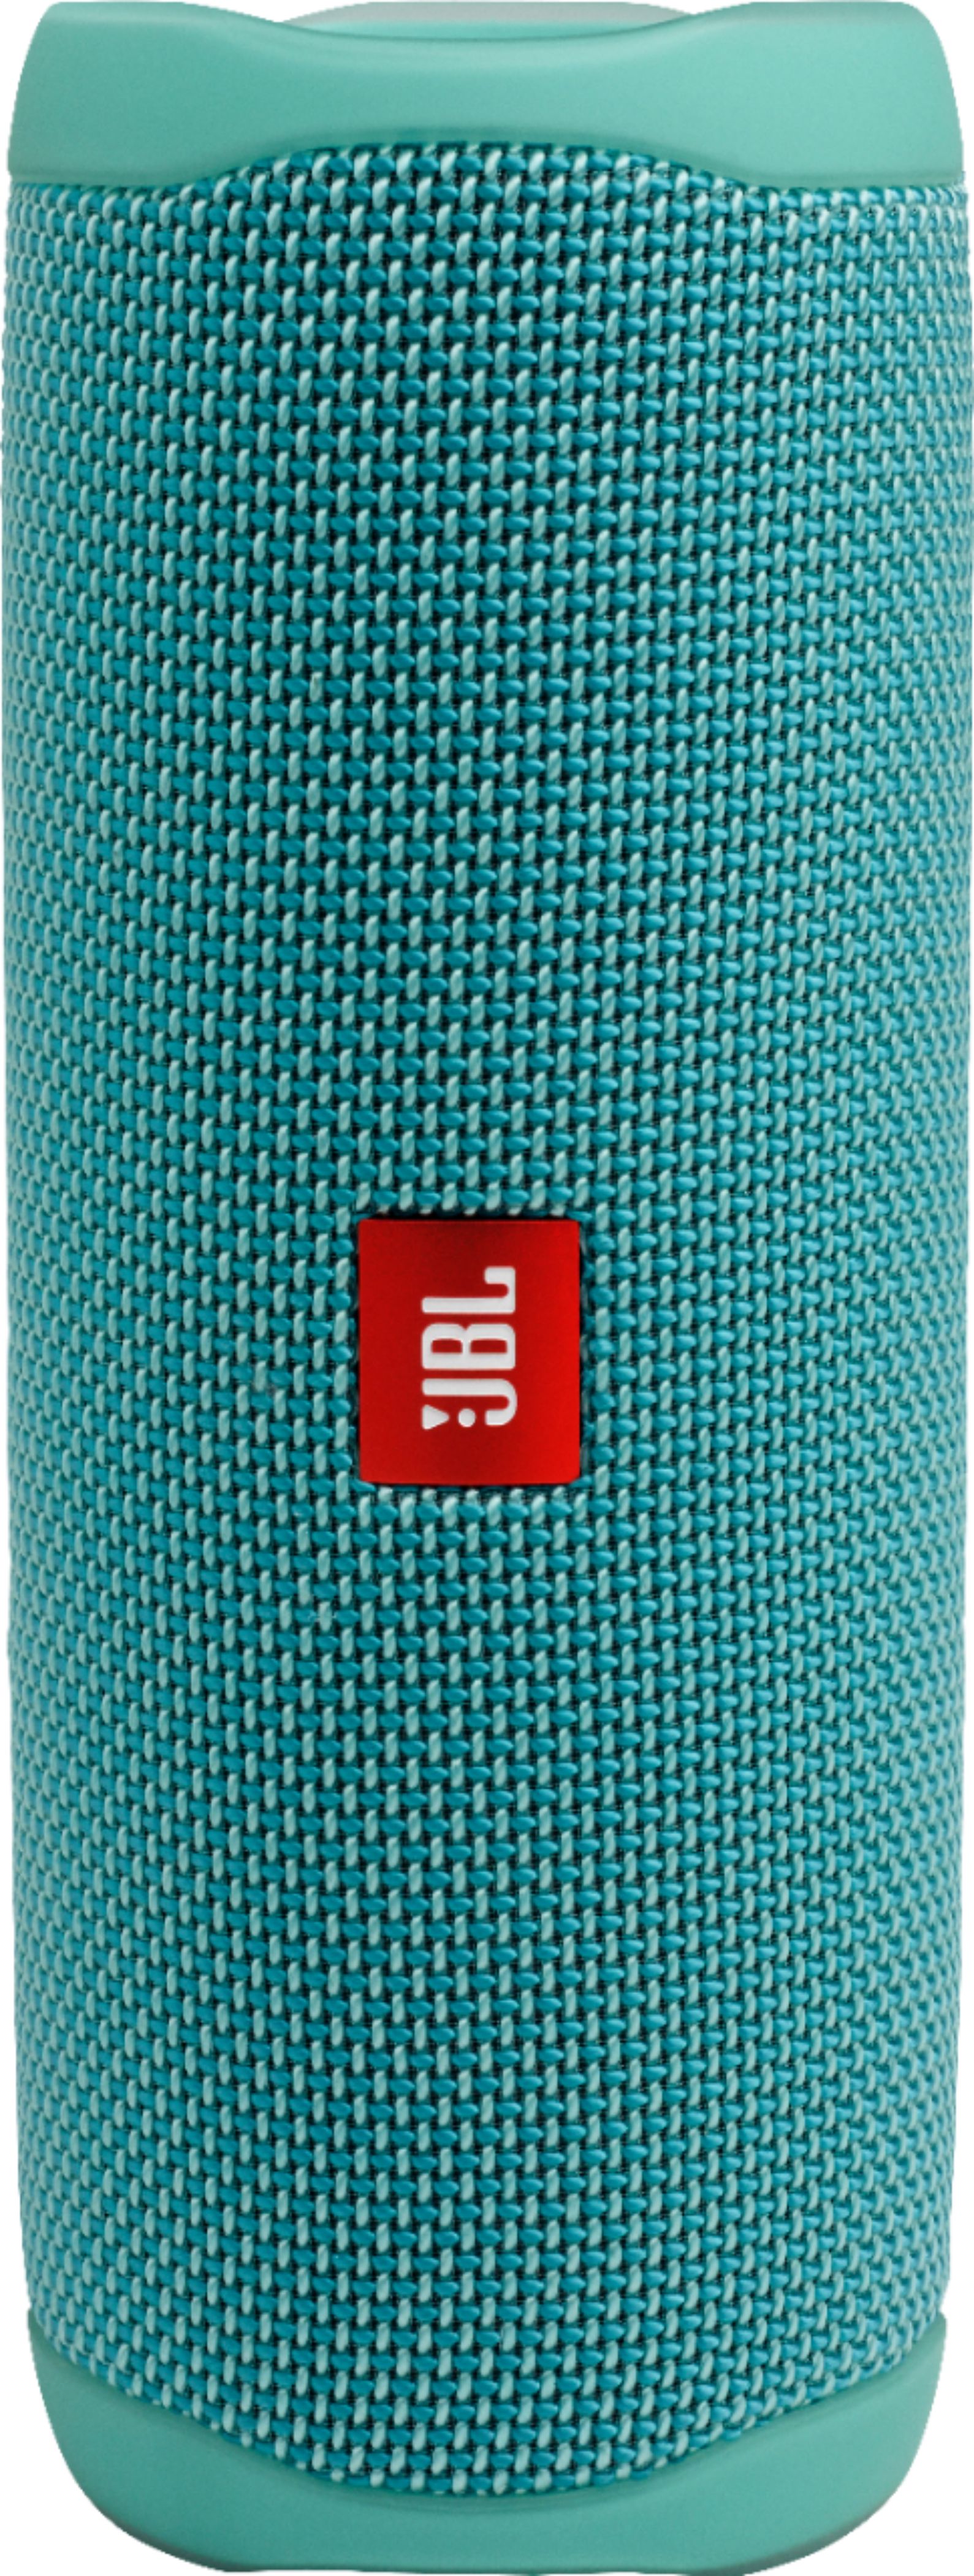 JBL Flip 5 Portable Bluetooth Speaker Gray Stone JBLFLIP5GRYAM - Best Buy